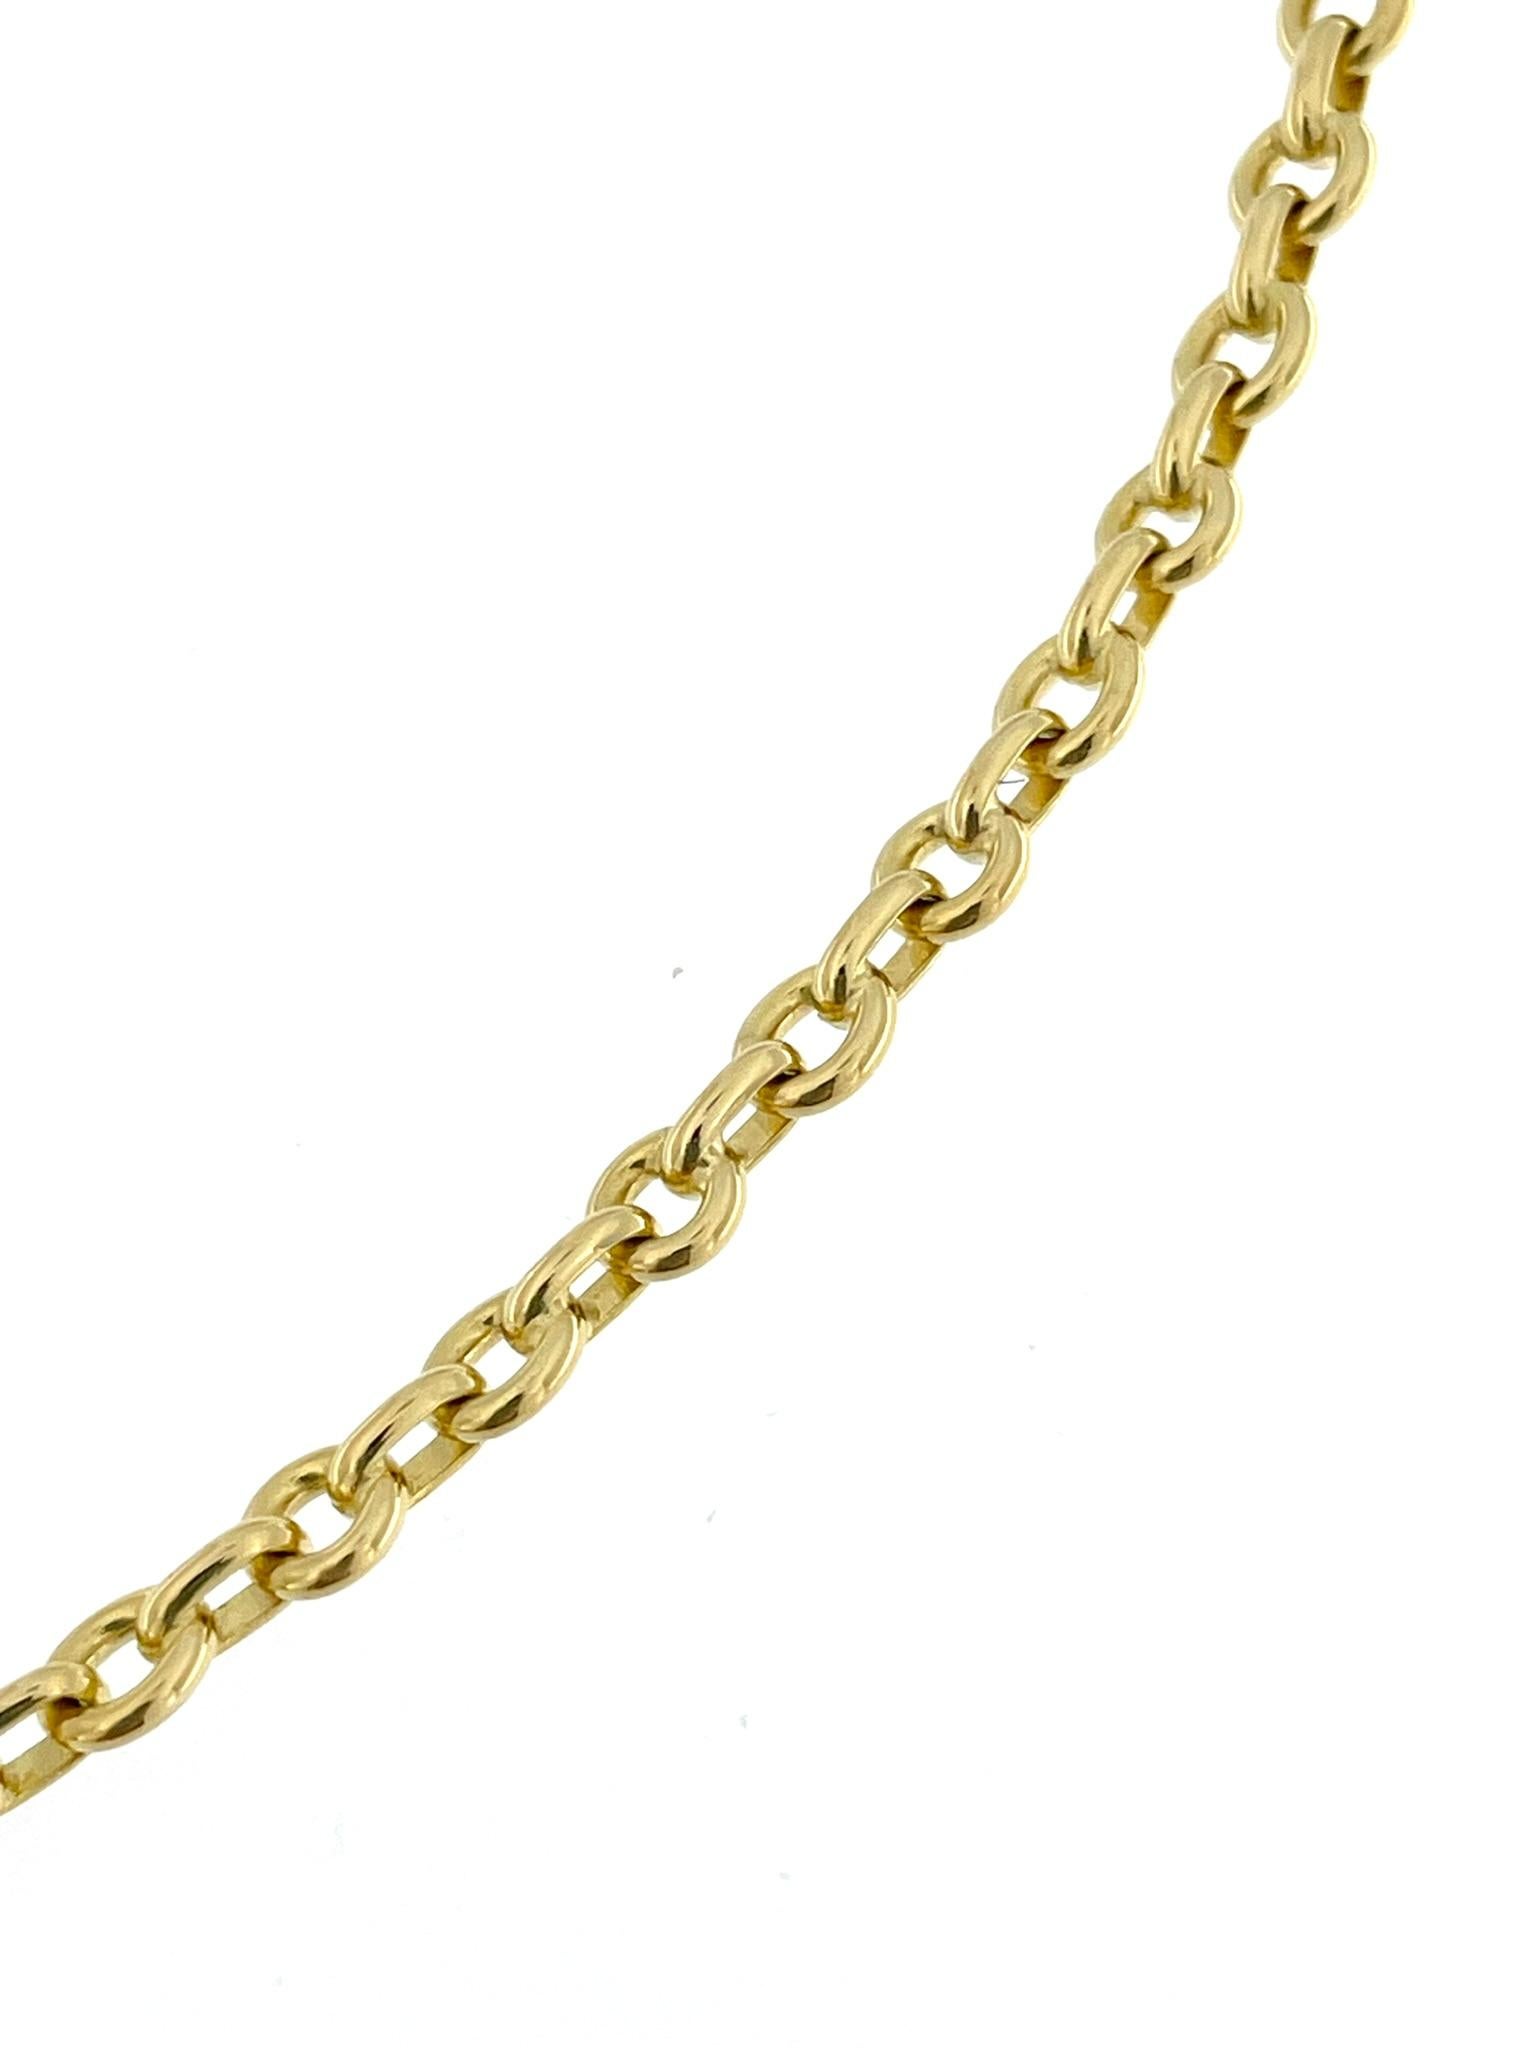 Women's or Men's Chaumet 18 karat Yellow Gold Chain For Sale